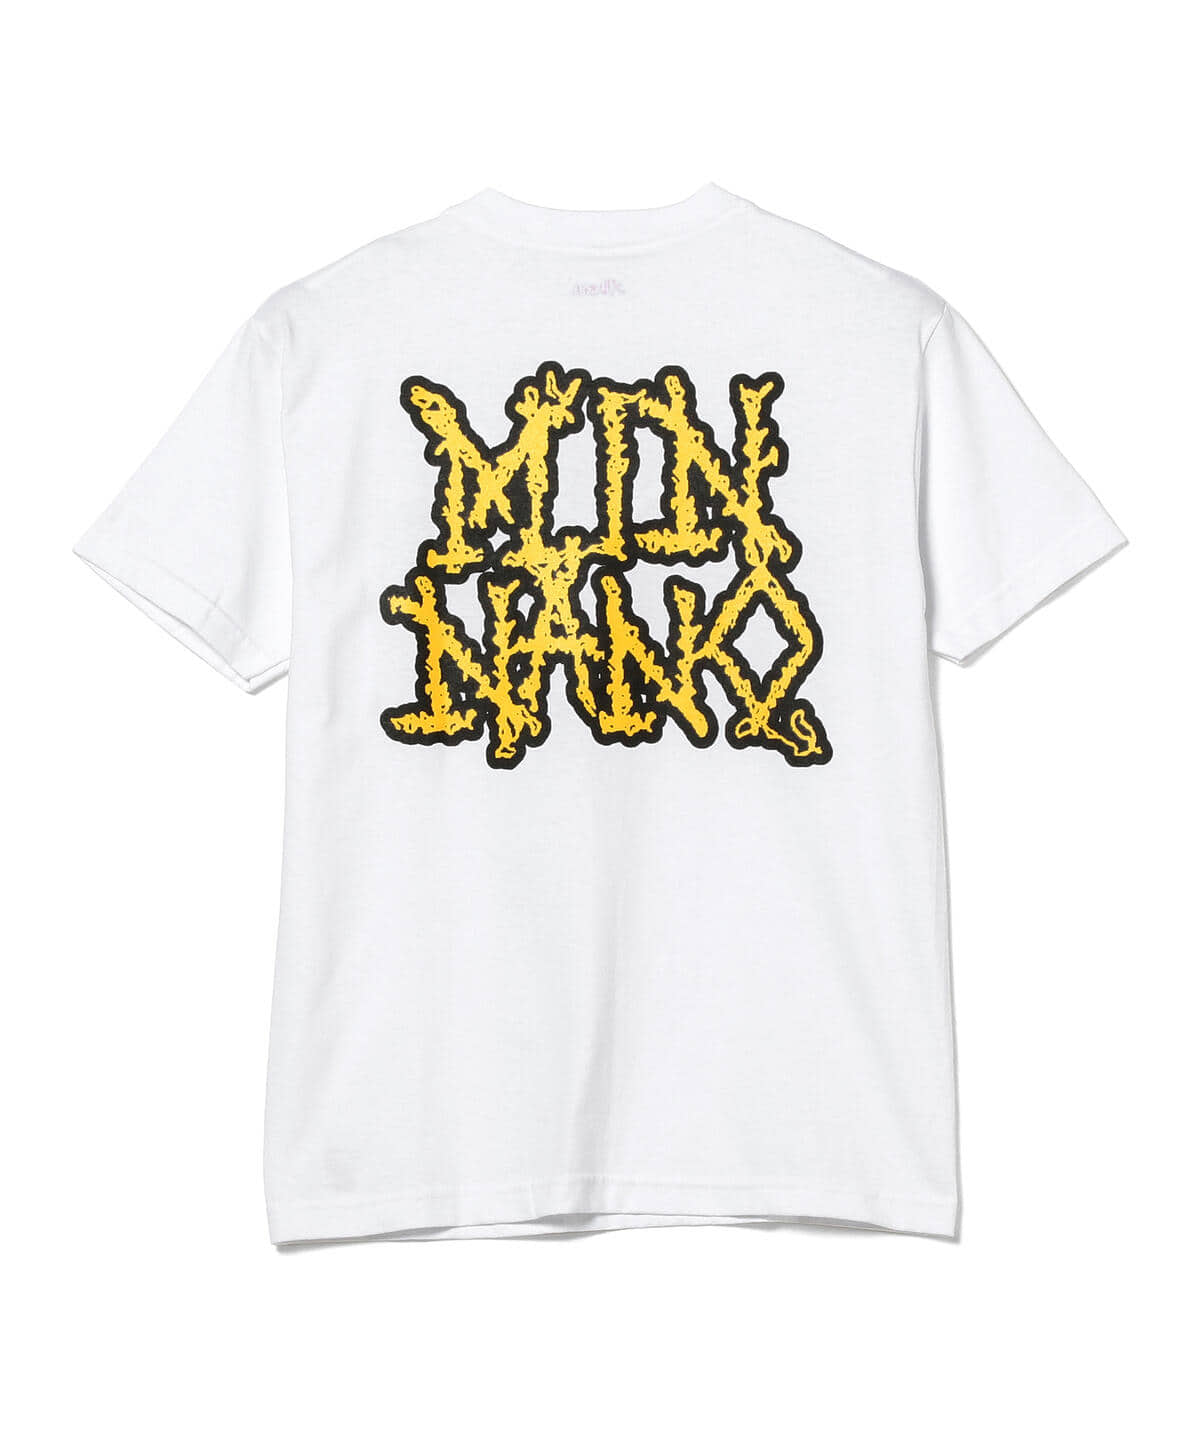 MINNANO FLYGUY Tee Tシャツ XL MIN-NANO